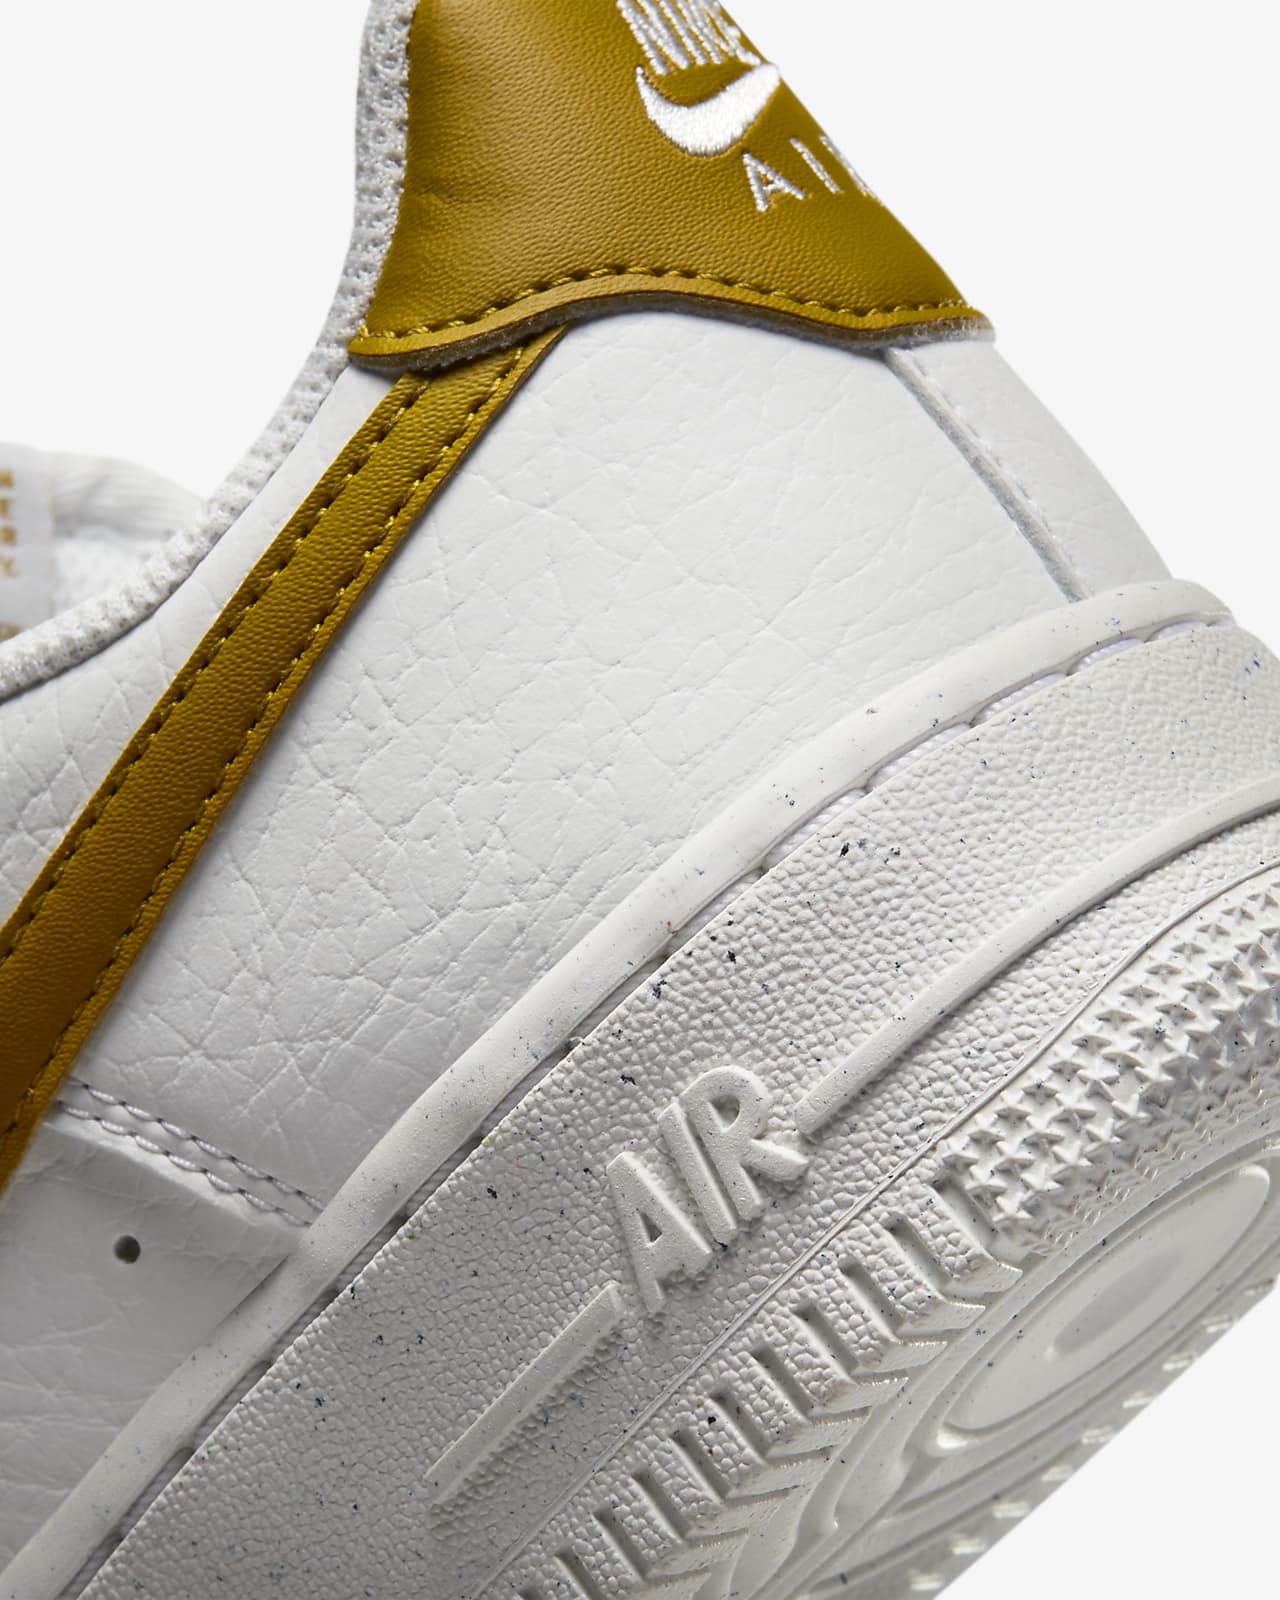 The Nike Air Force 1 Glistens in 'Rose Gold' - Sneaker Freaker